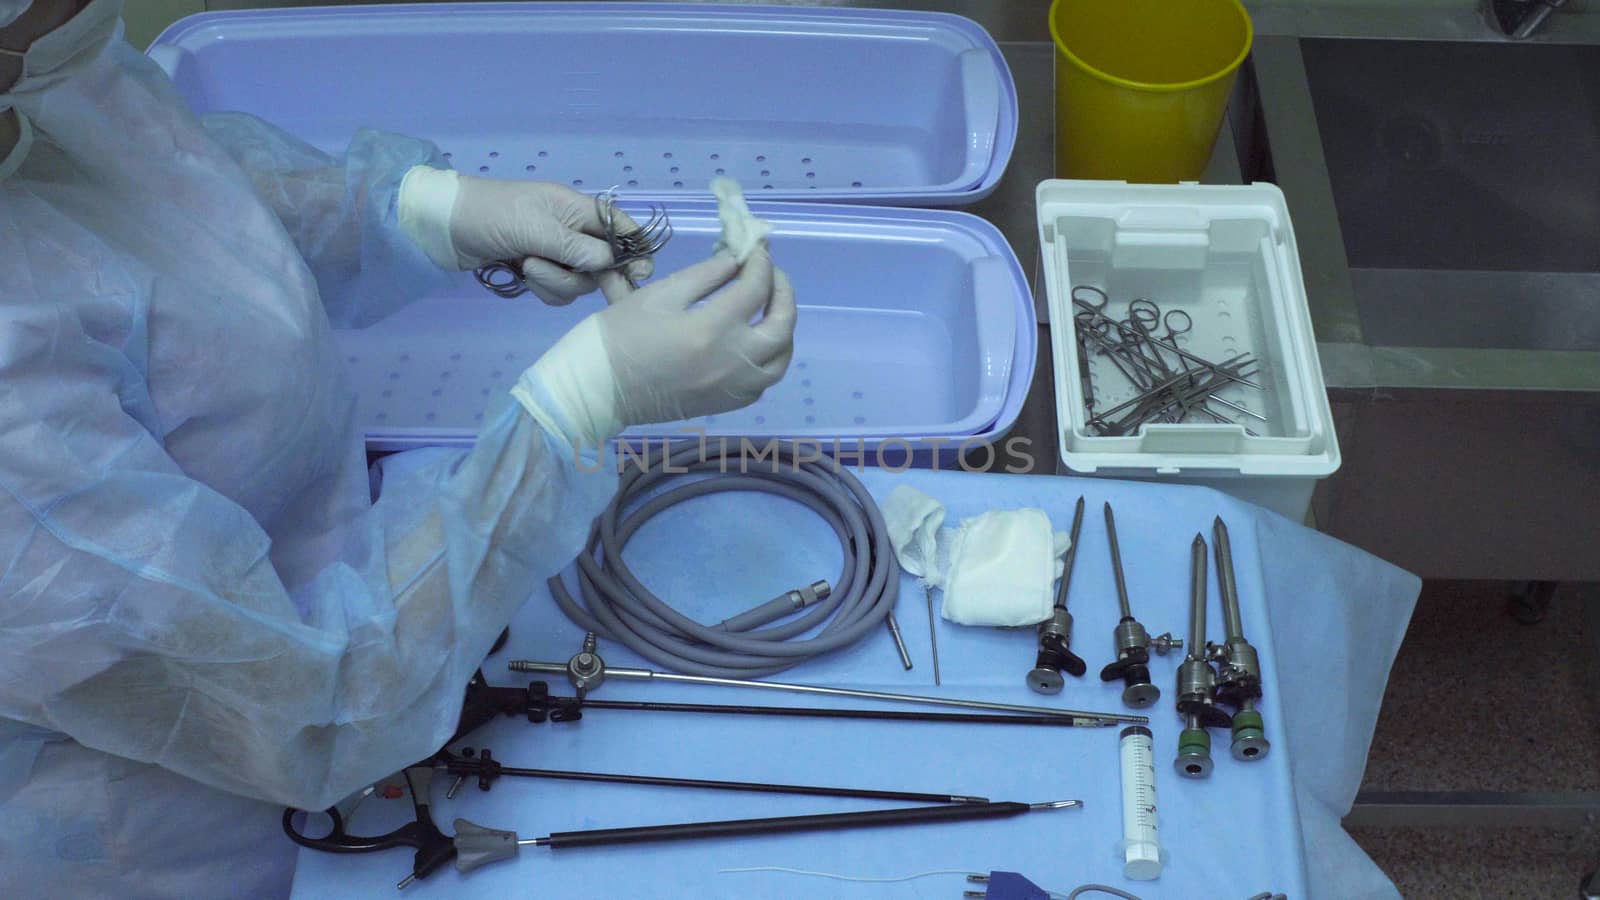 The surgical nurse washing medical instrument by Chudakov